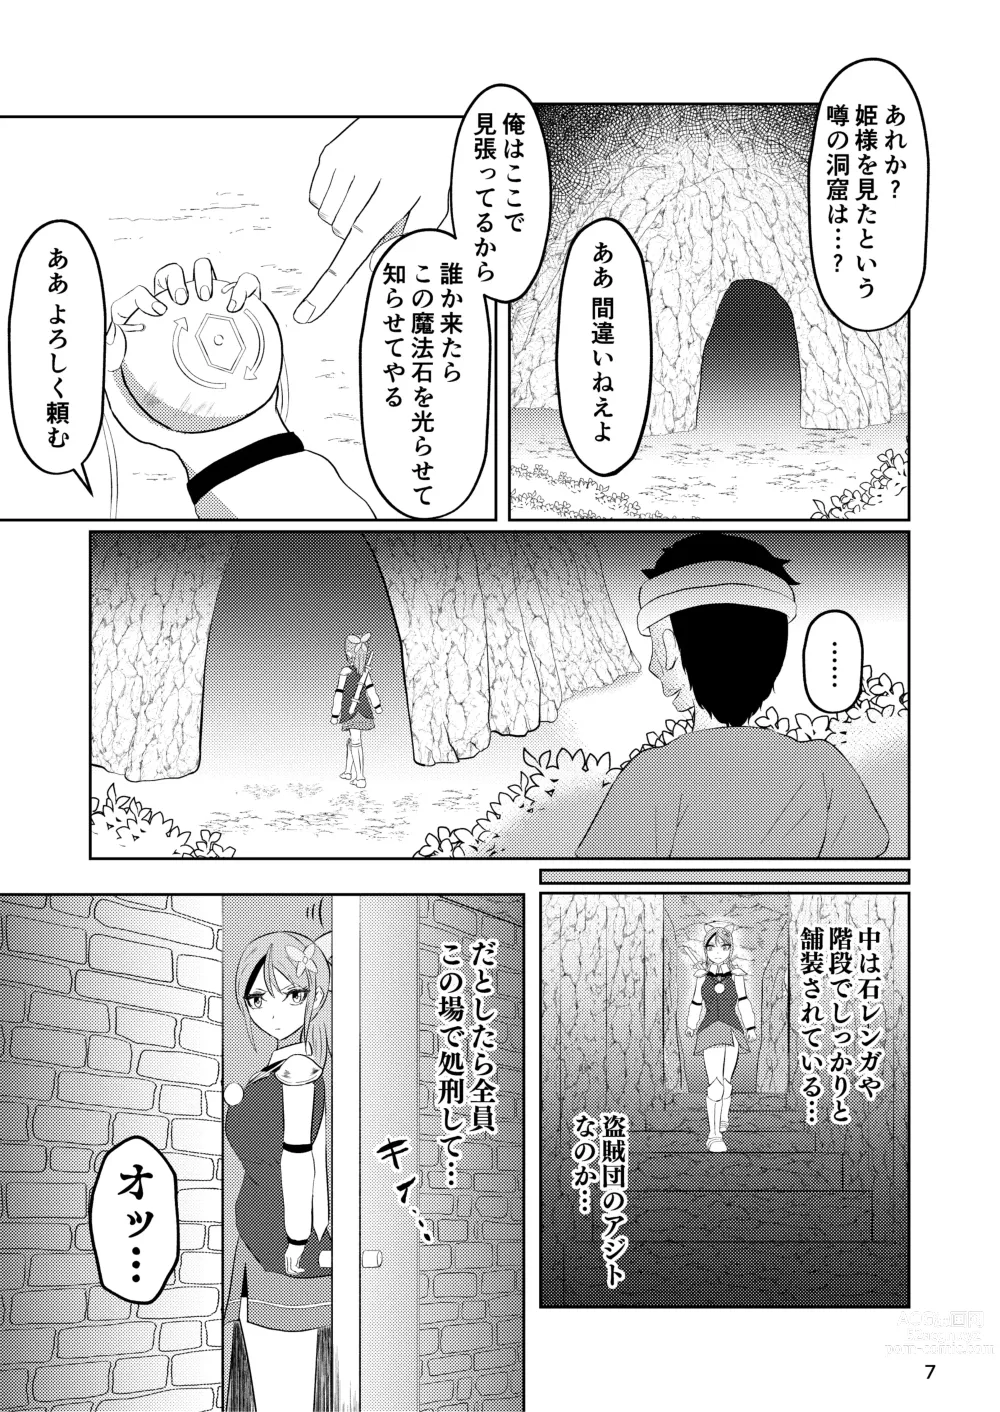 Page 6 of doujinshi Hime to Kishi  wa Nukarumi ni Kawaru